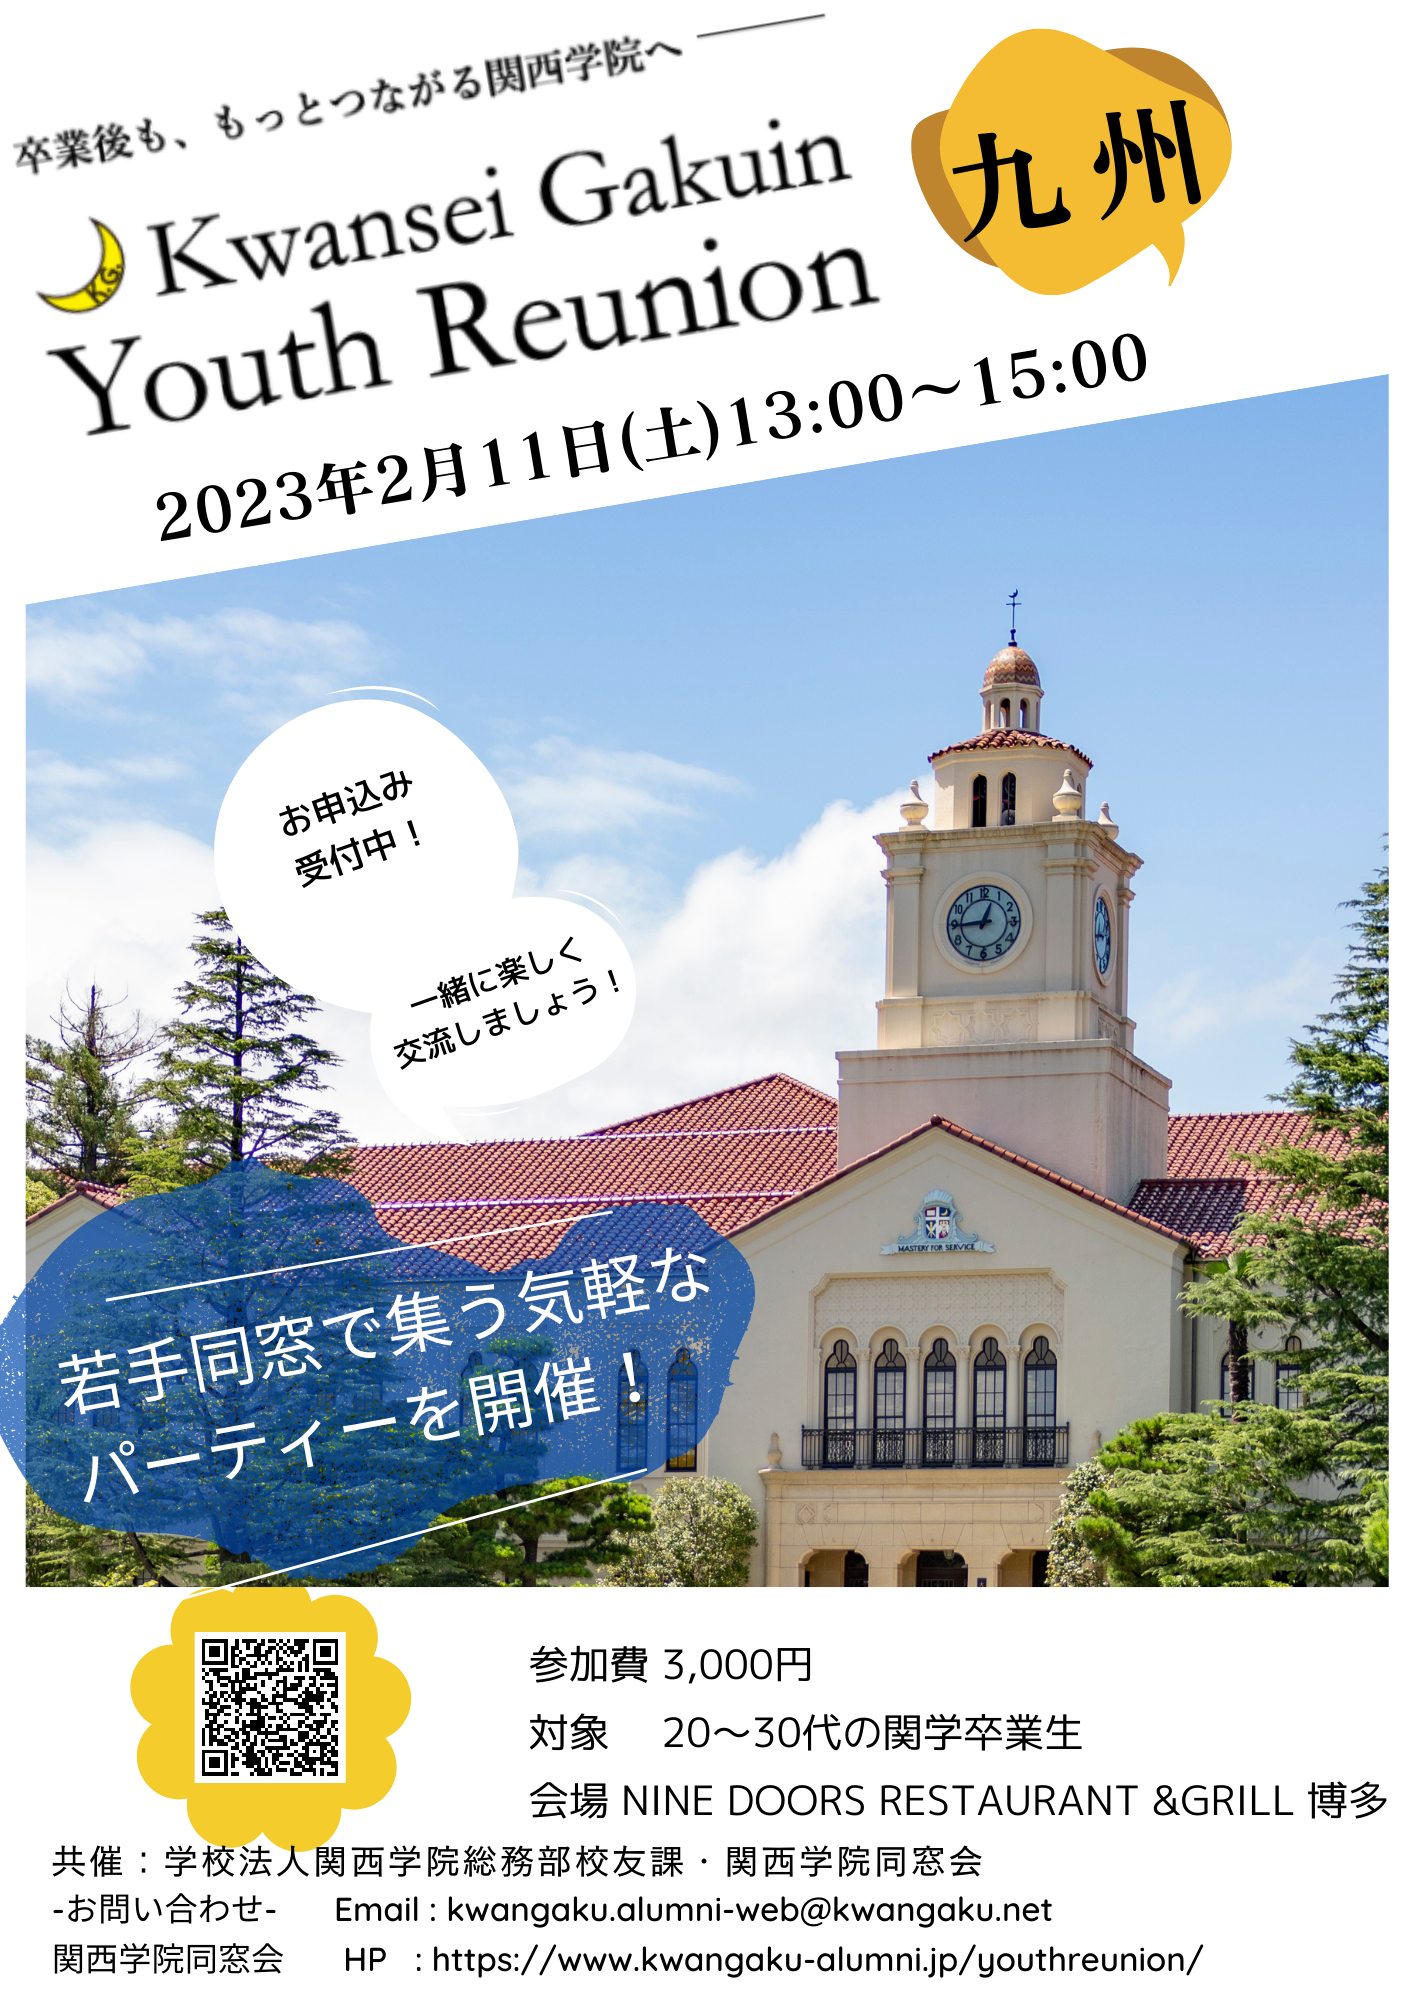 【Kwansei Gakuin Youth Reunion 九州】 開催のお知らせ